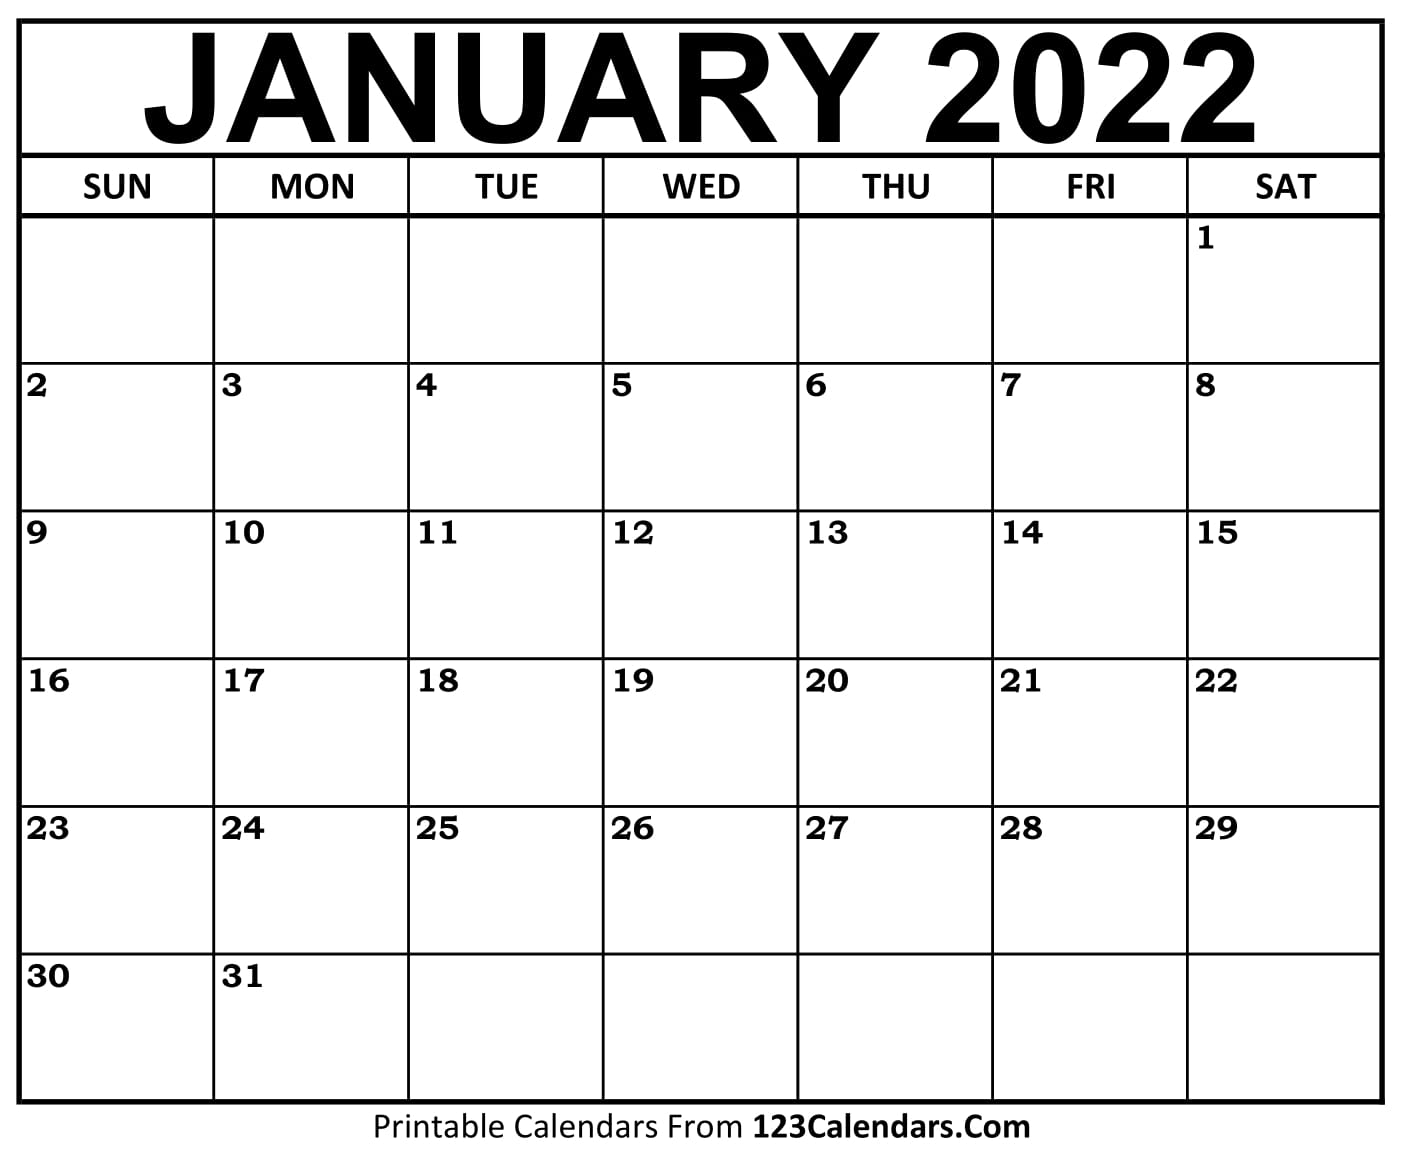 Free January 2022 Calendar Template Printable January 2022 Calendar Templates - 123Calendars.com